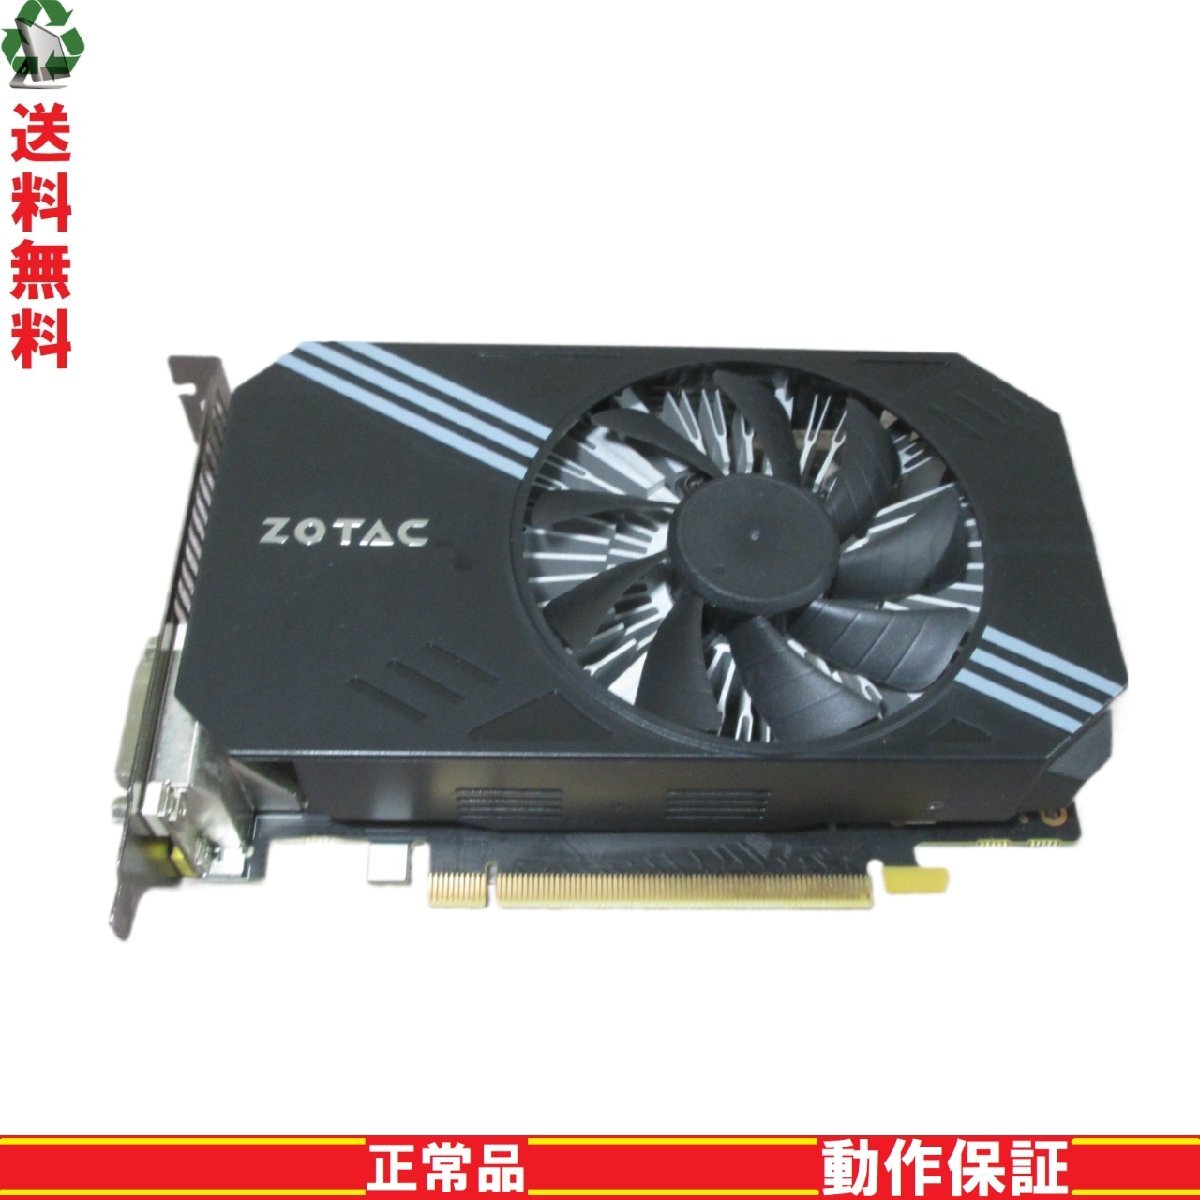 ZOTAC GeForce GTX 950 グラフィックボード ZT-90601-10L 送料無料 正常品 [89331]_画像1